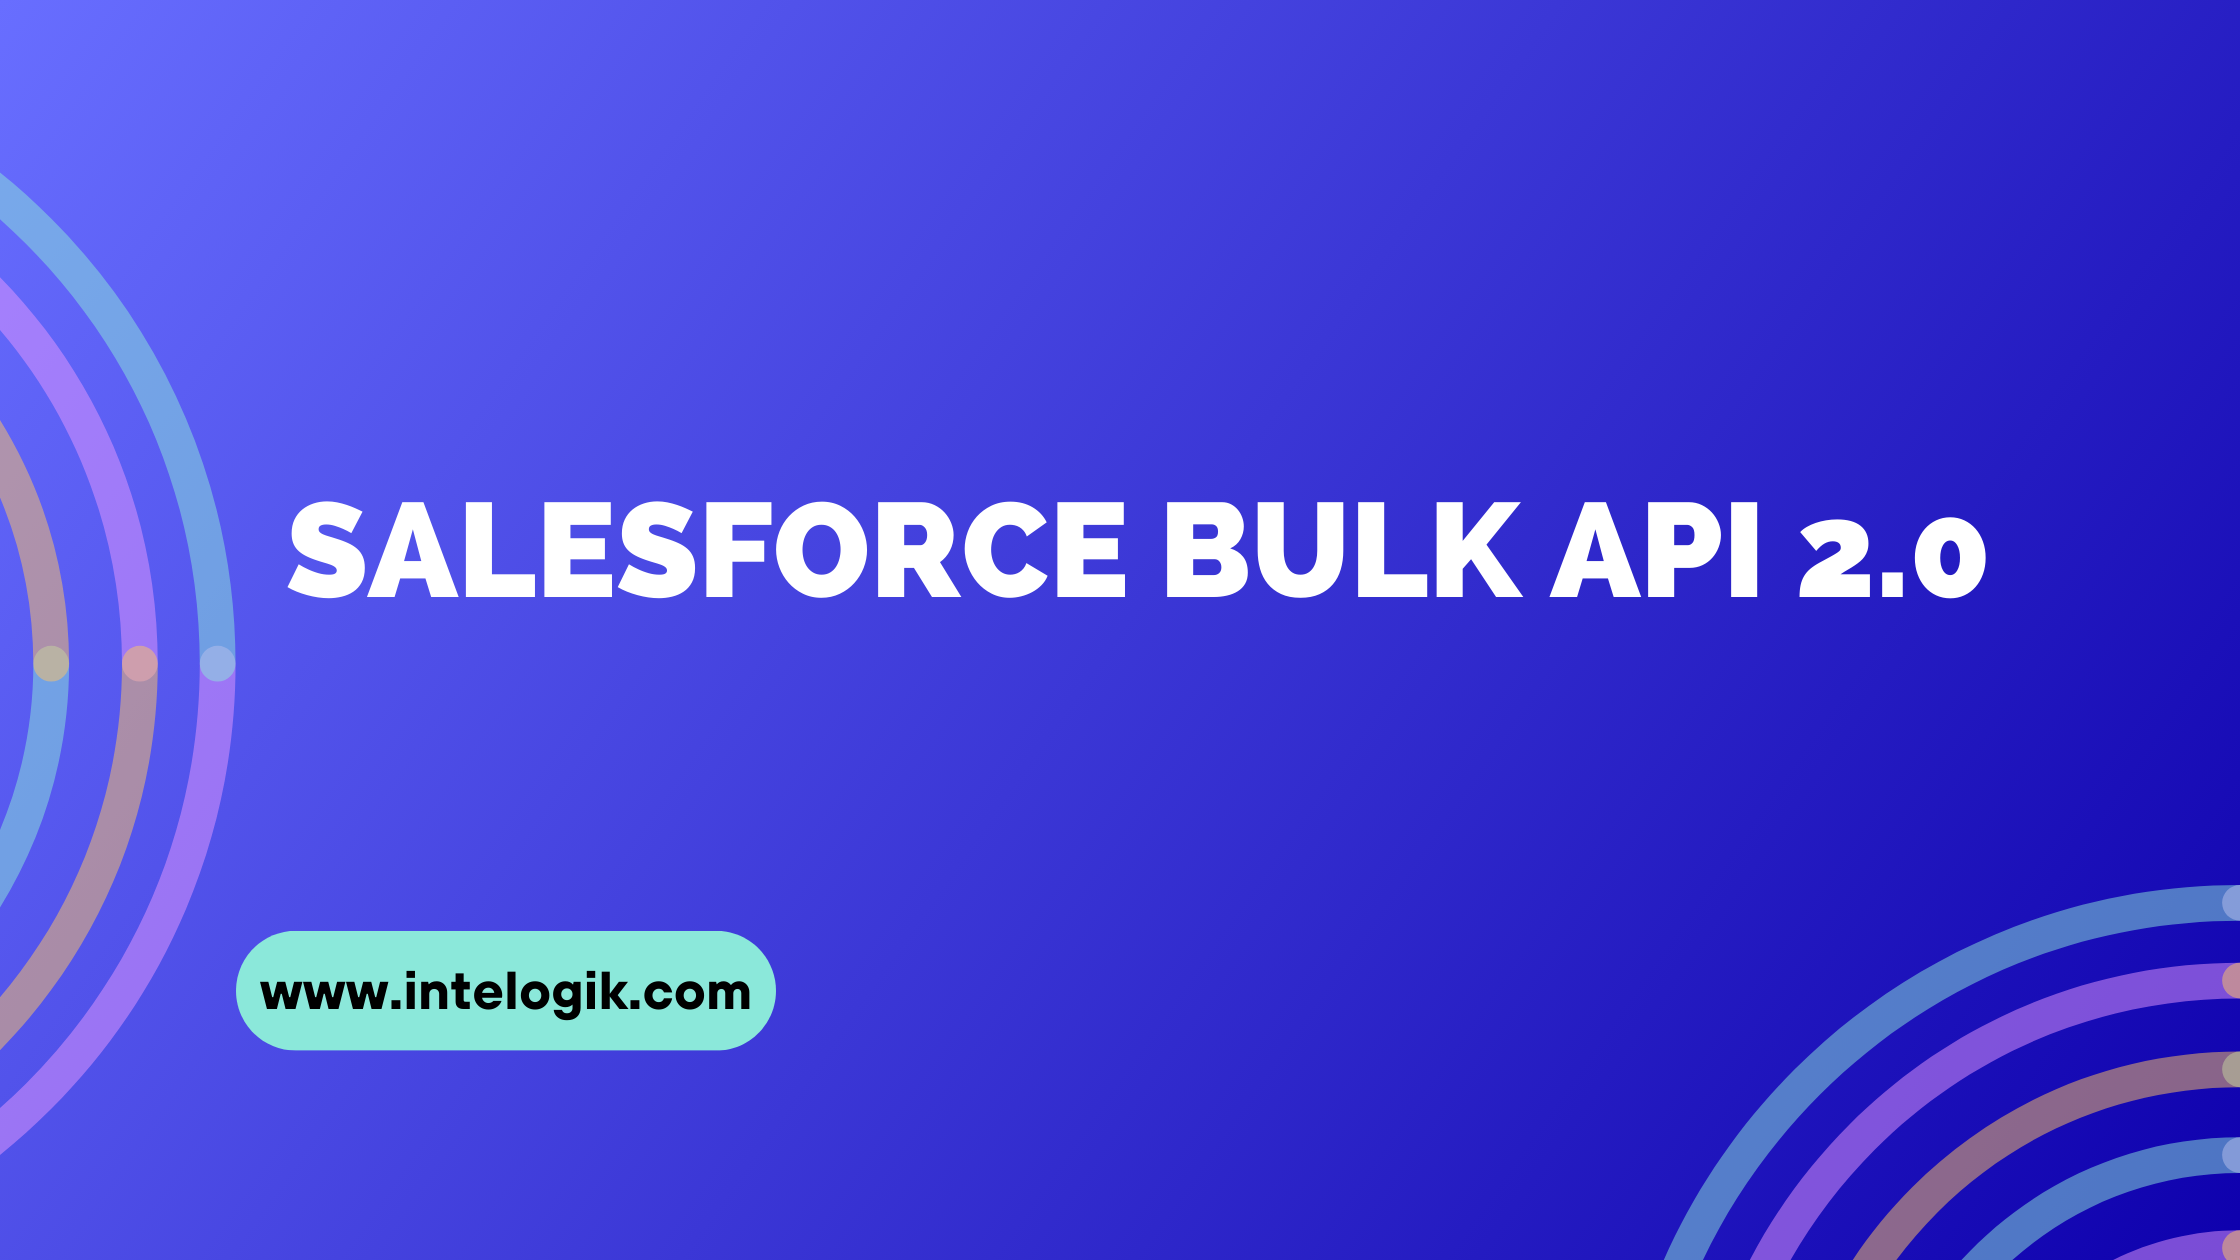 Salesforce Bulk API 2.0